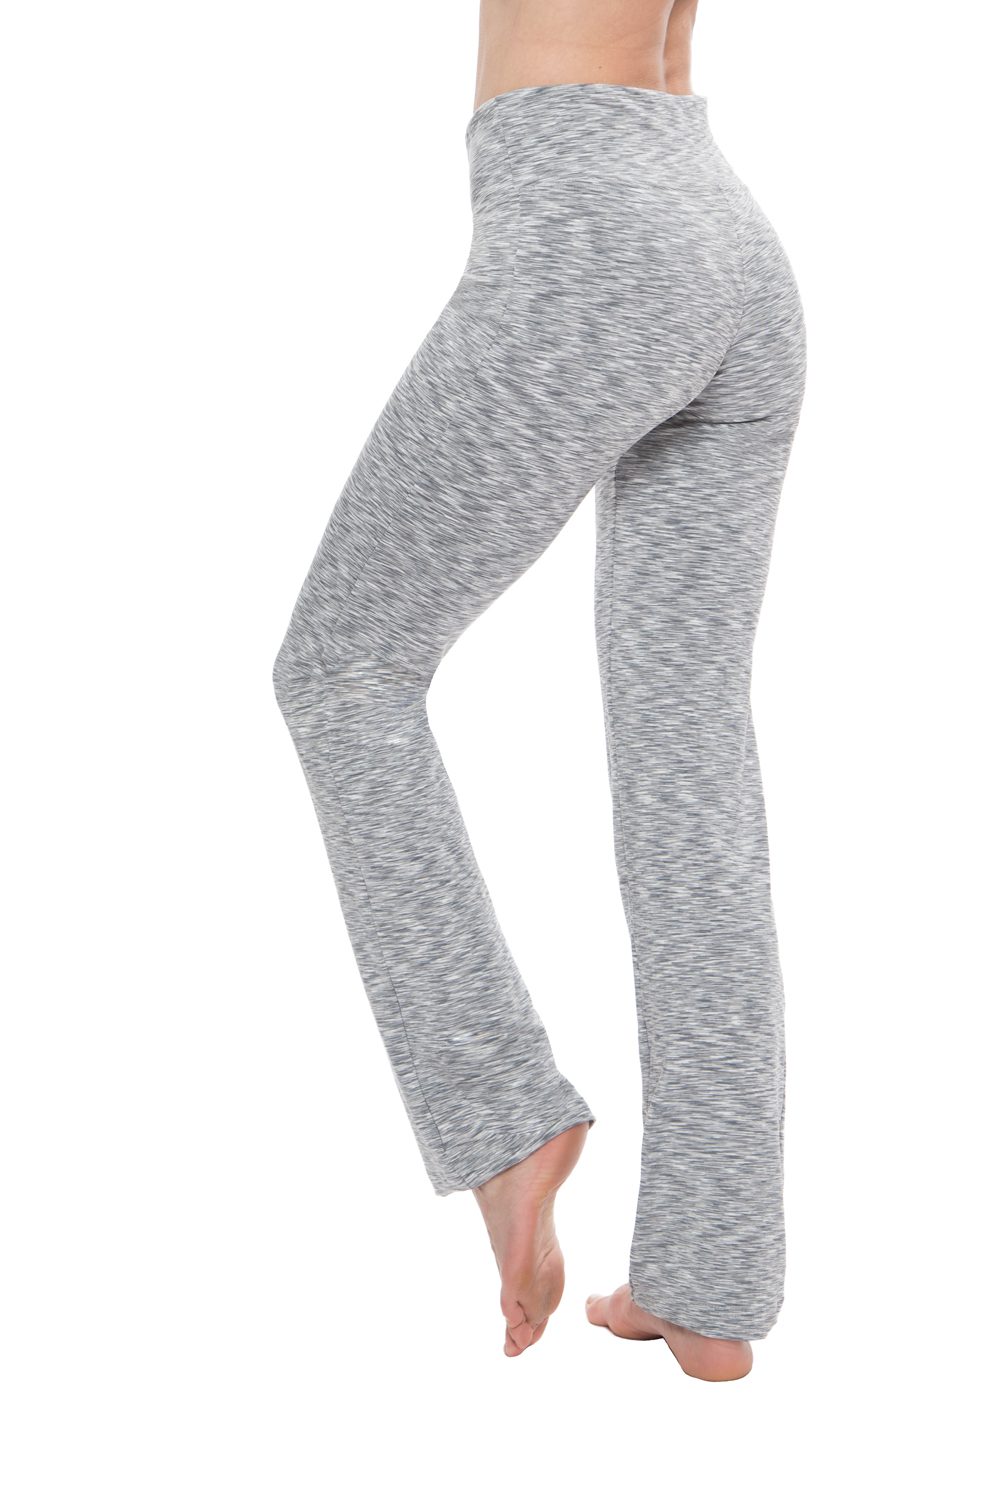 Straight Leg Yoga Pants for Women – Grey – Nirlon